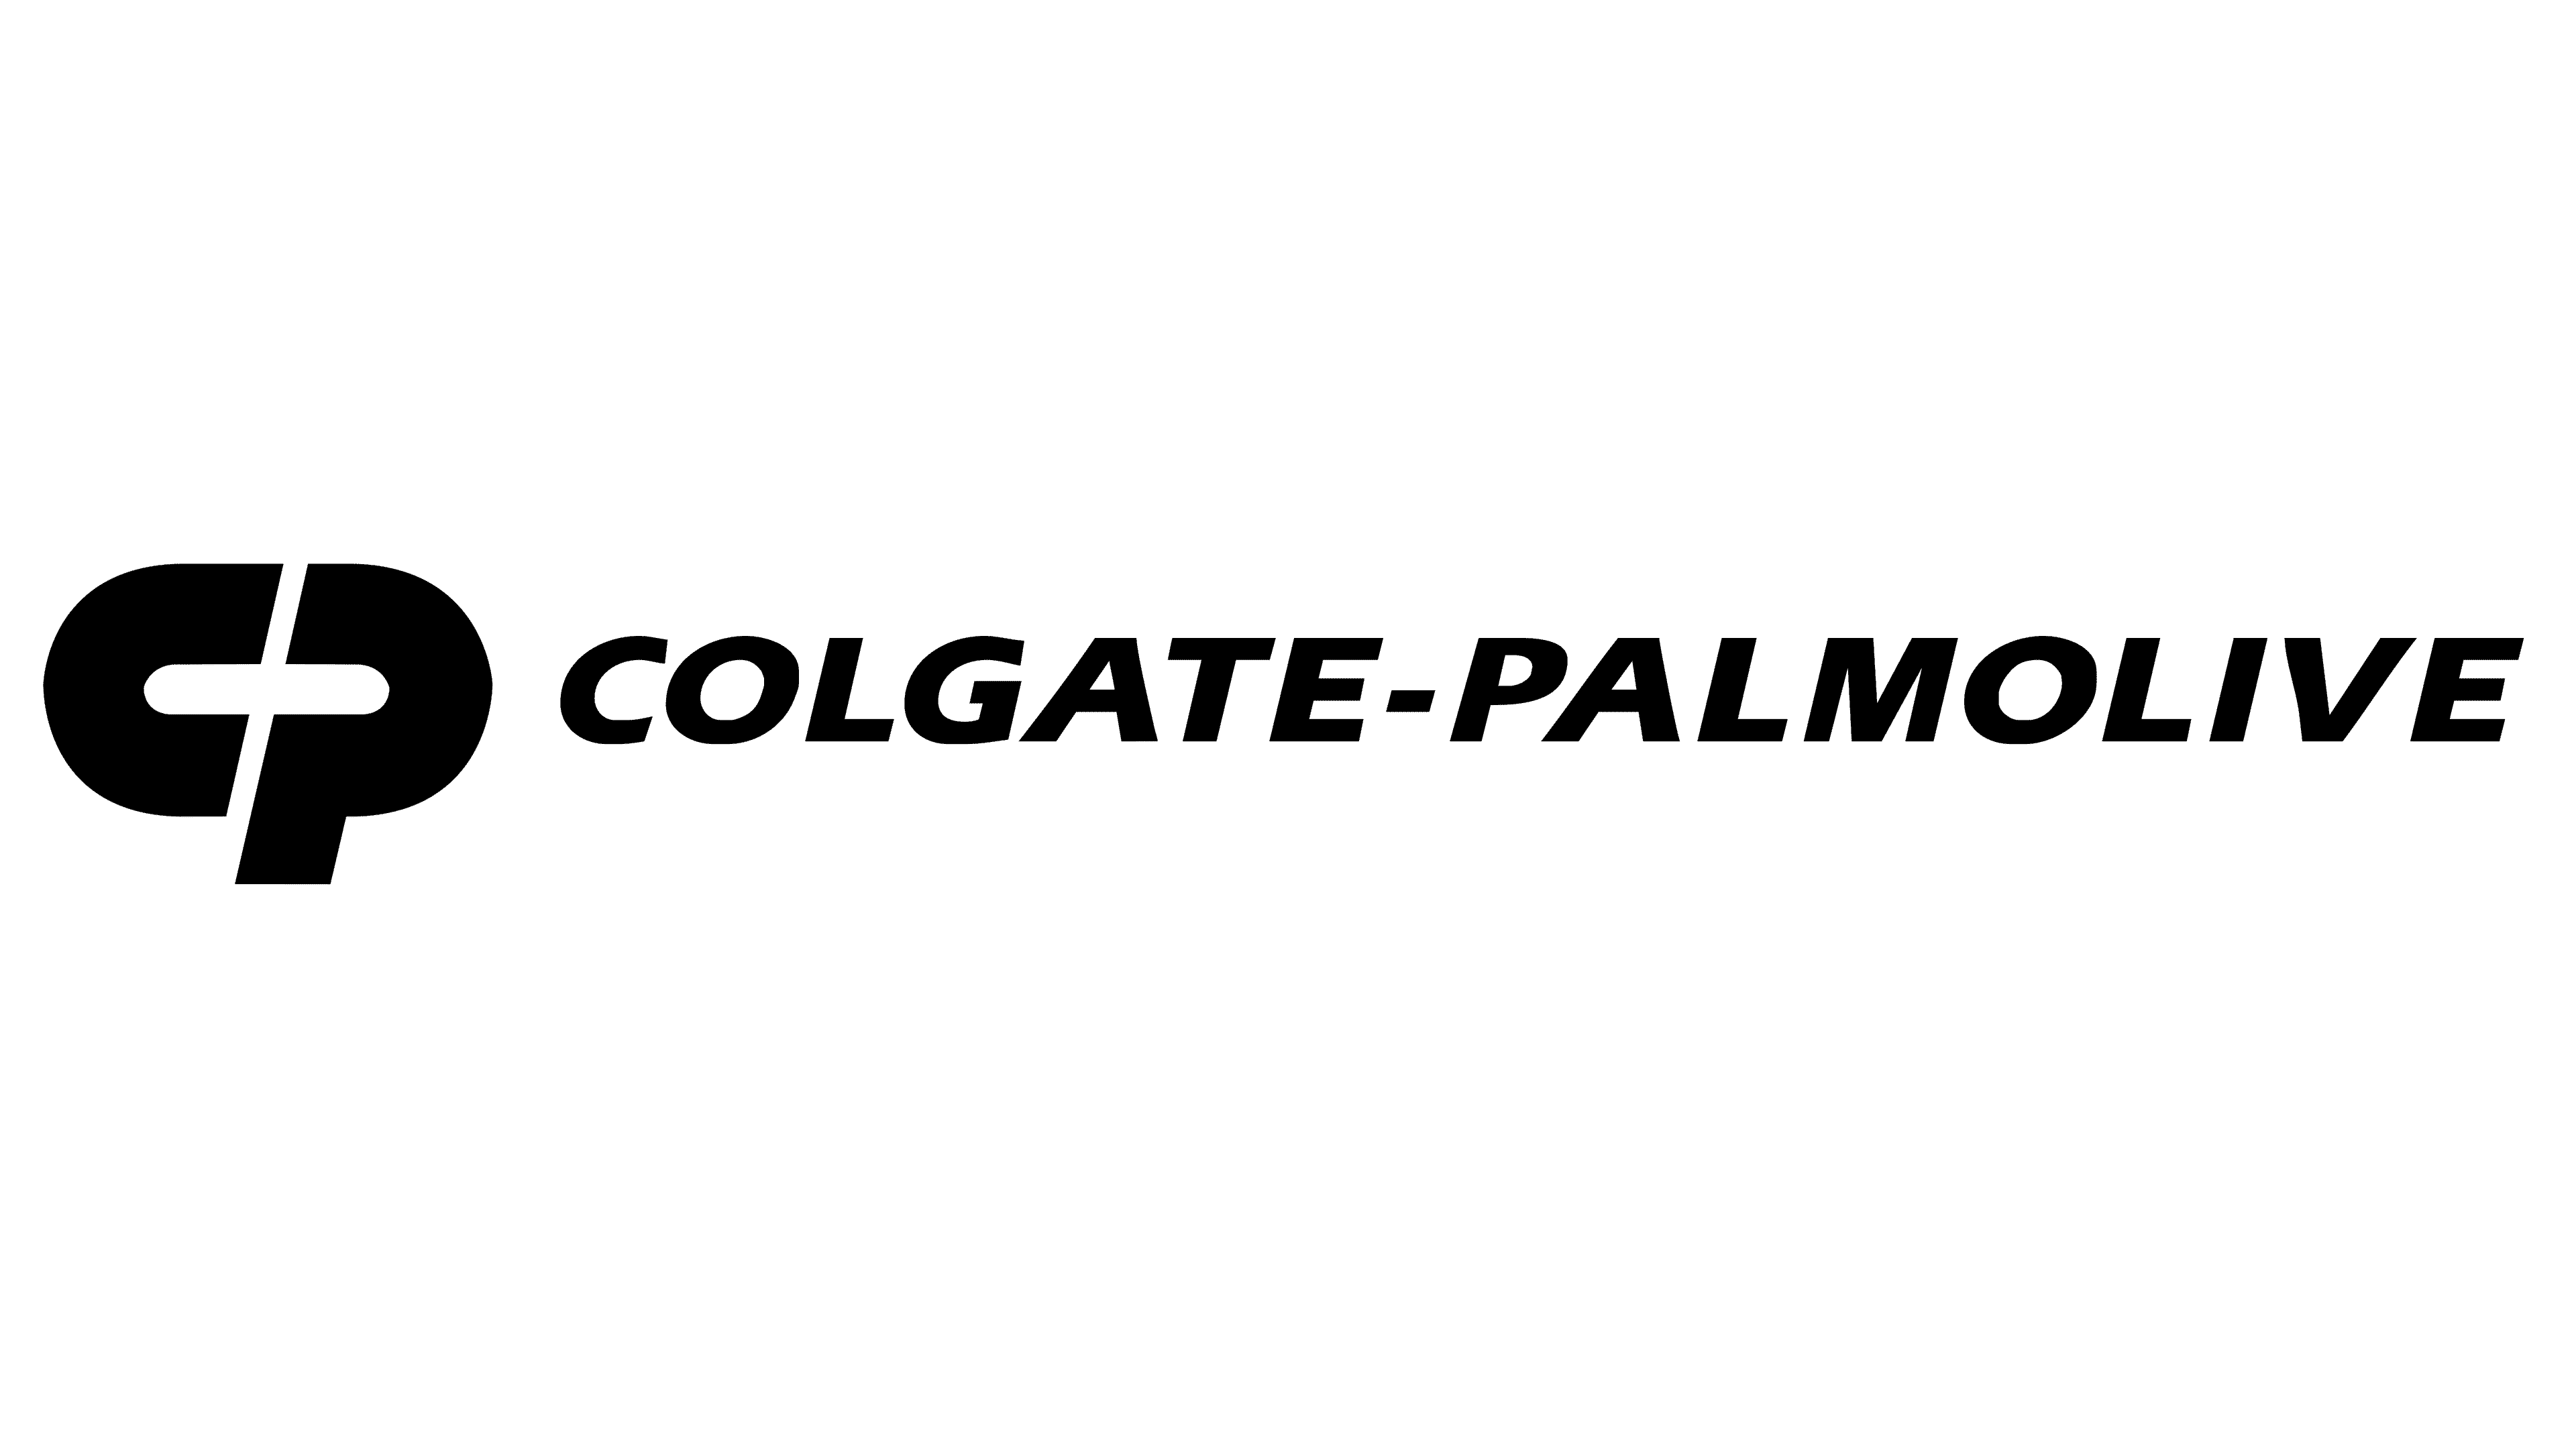 colgate-palmolive-logo-symbol-meaning-history-png-brand